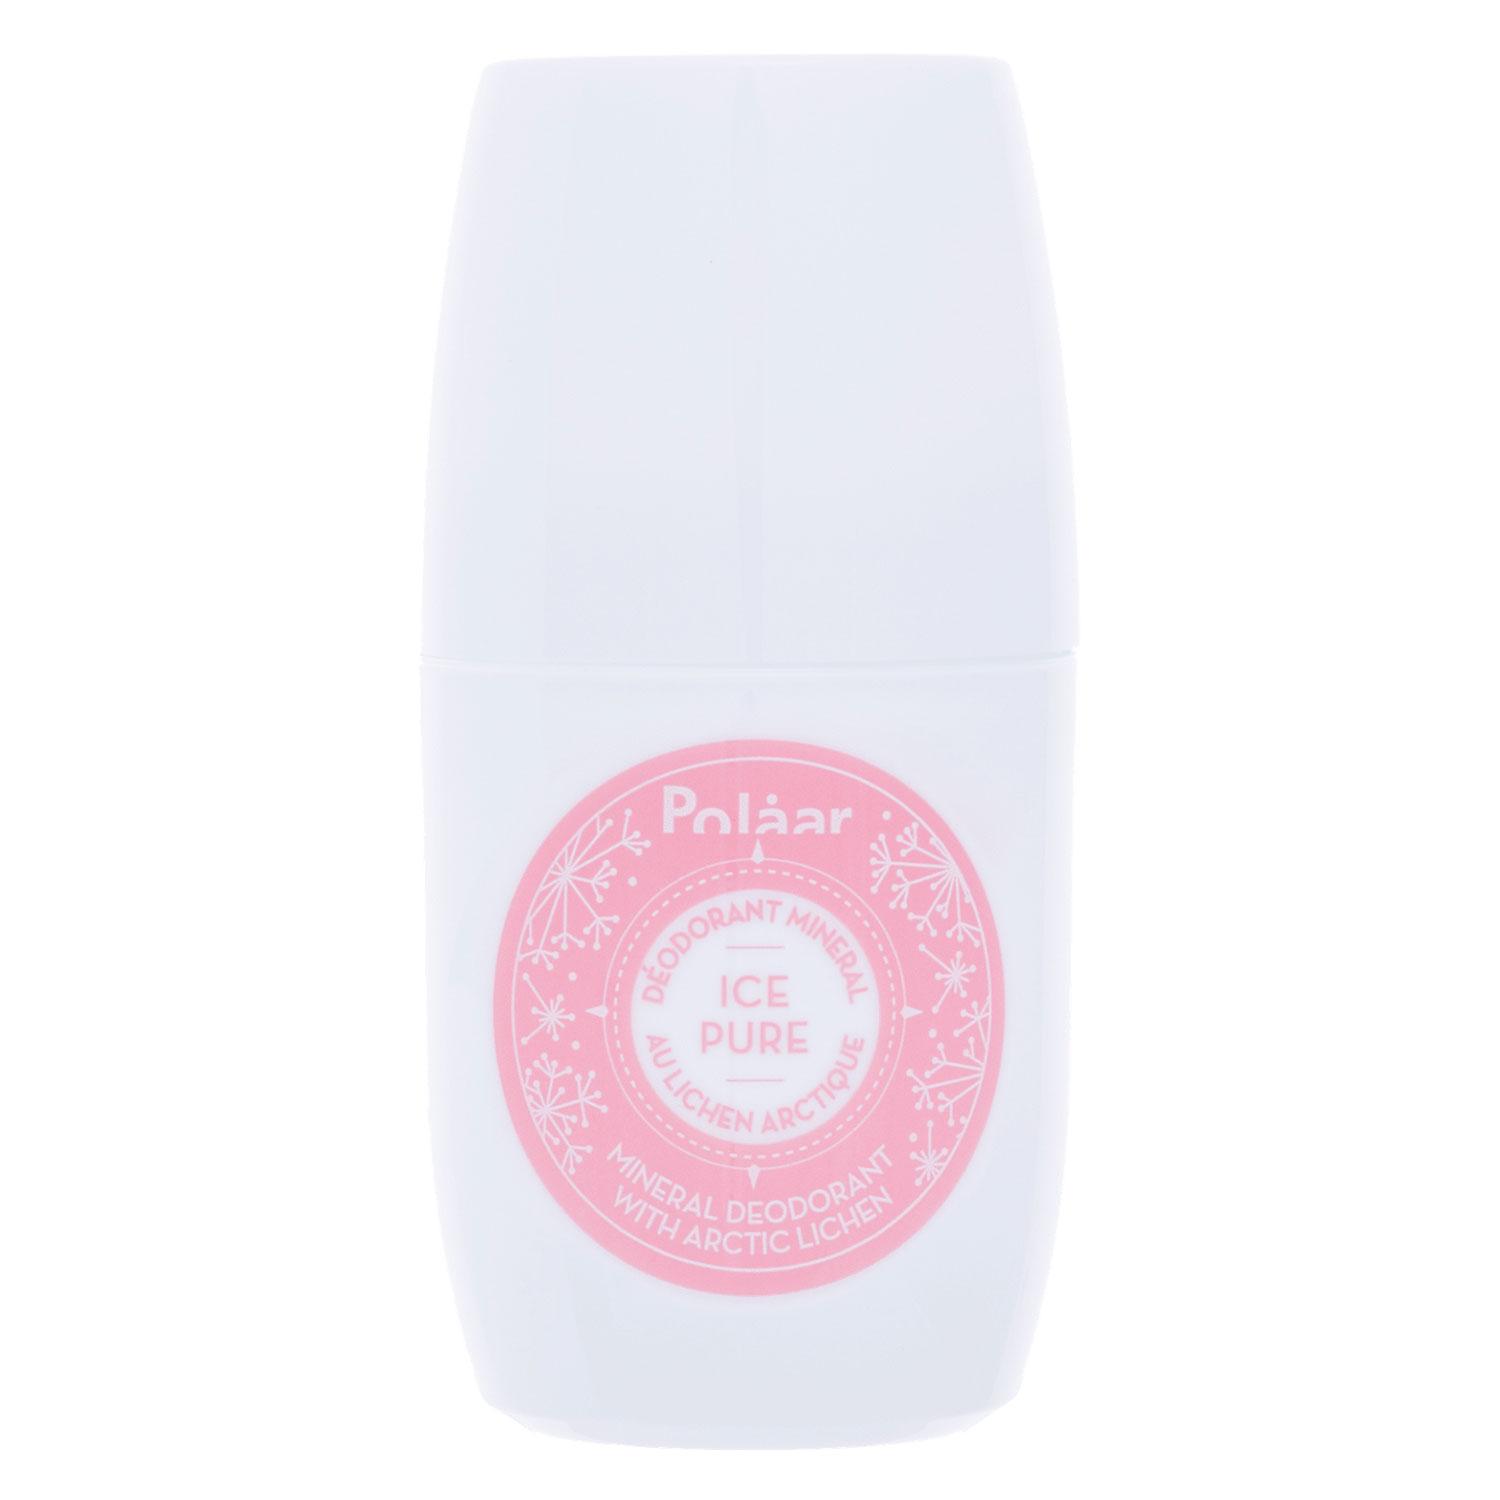 Polaar - Ice Pure Mineral Deodorant